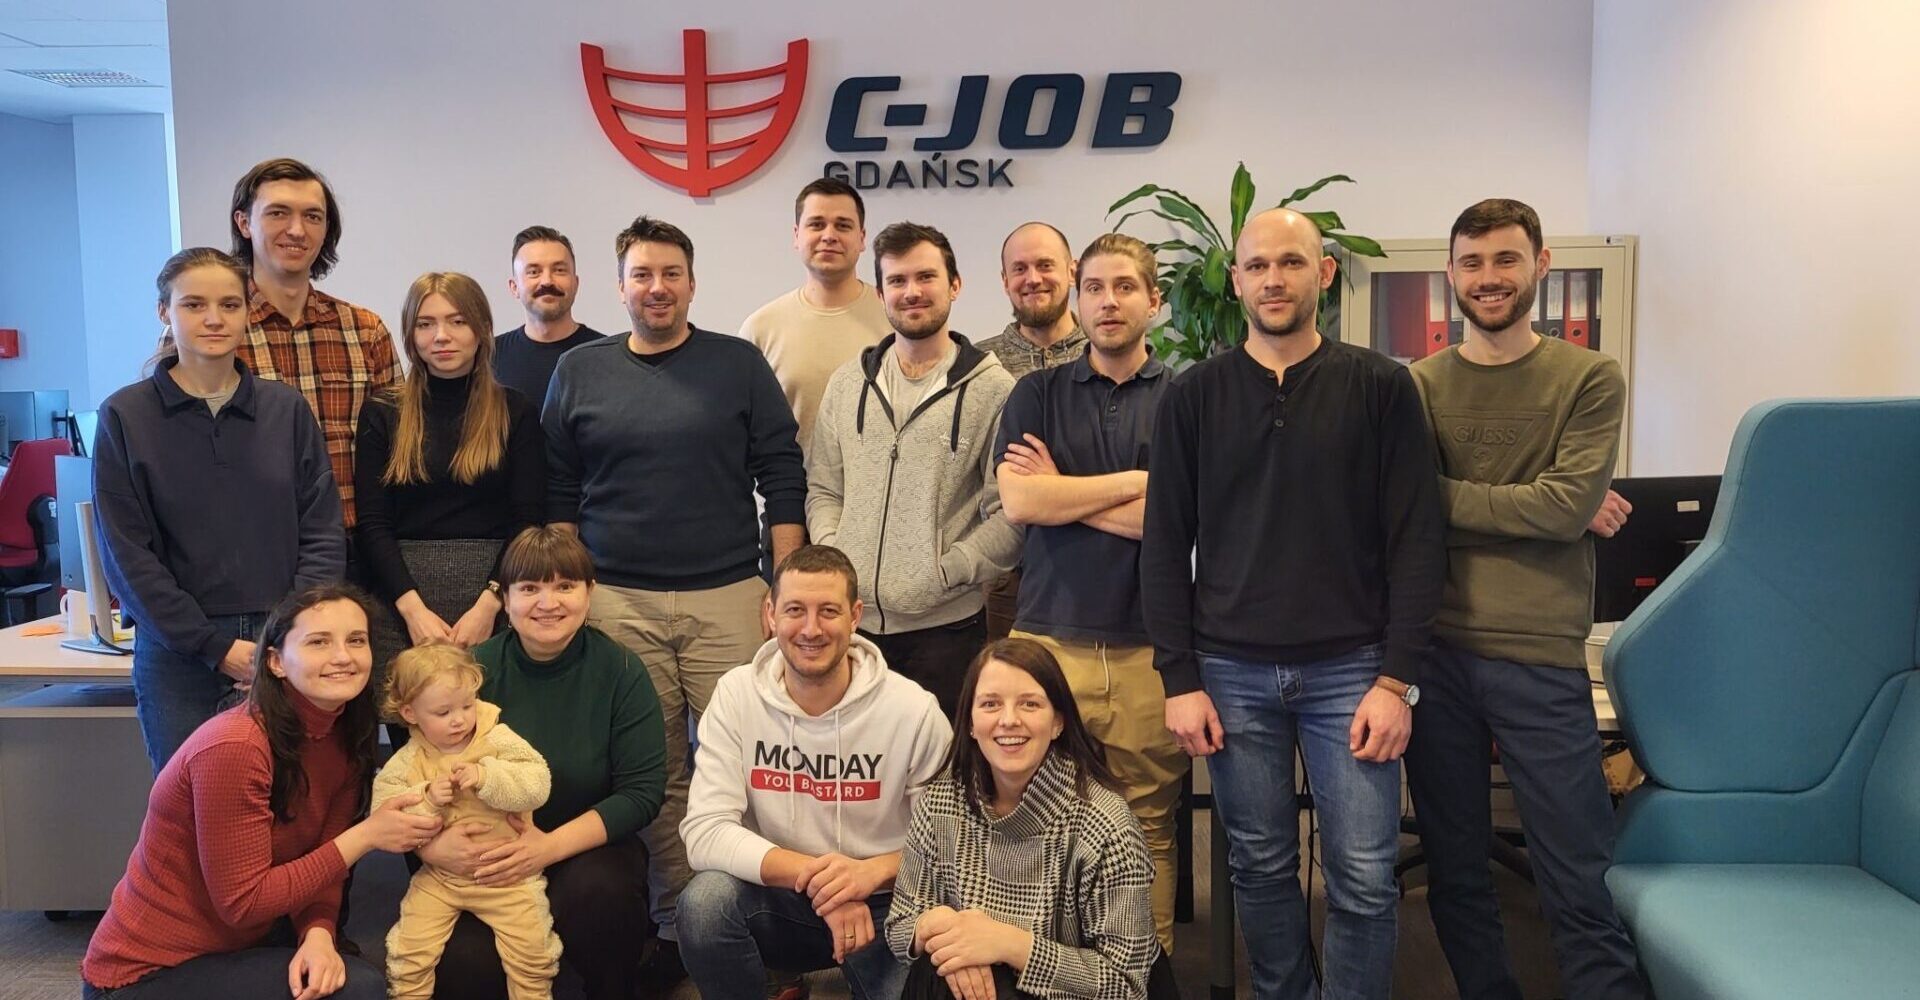 C-Job Gdansk group photo in office